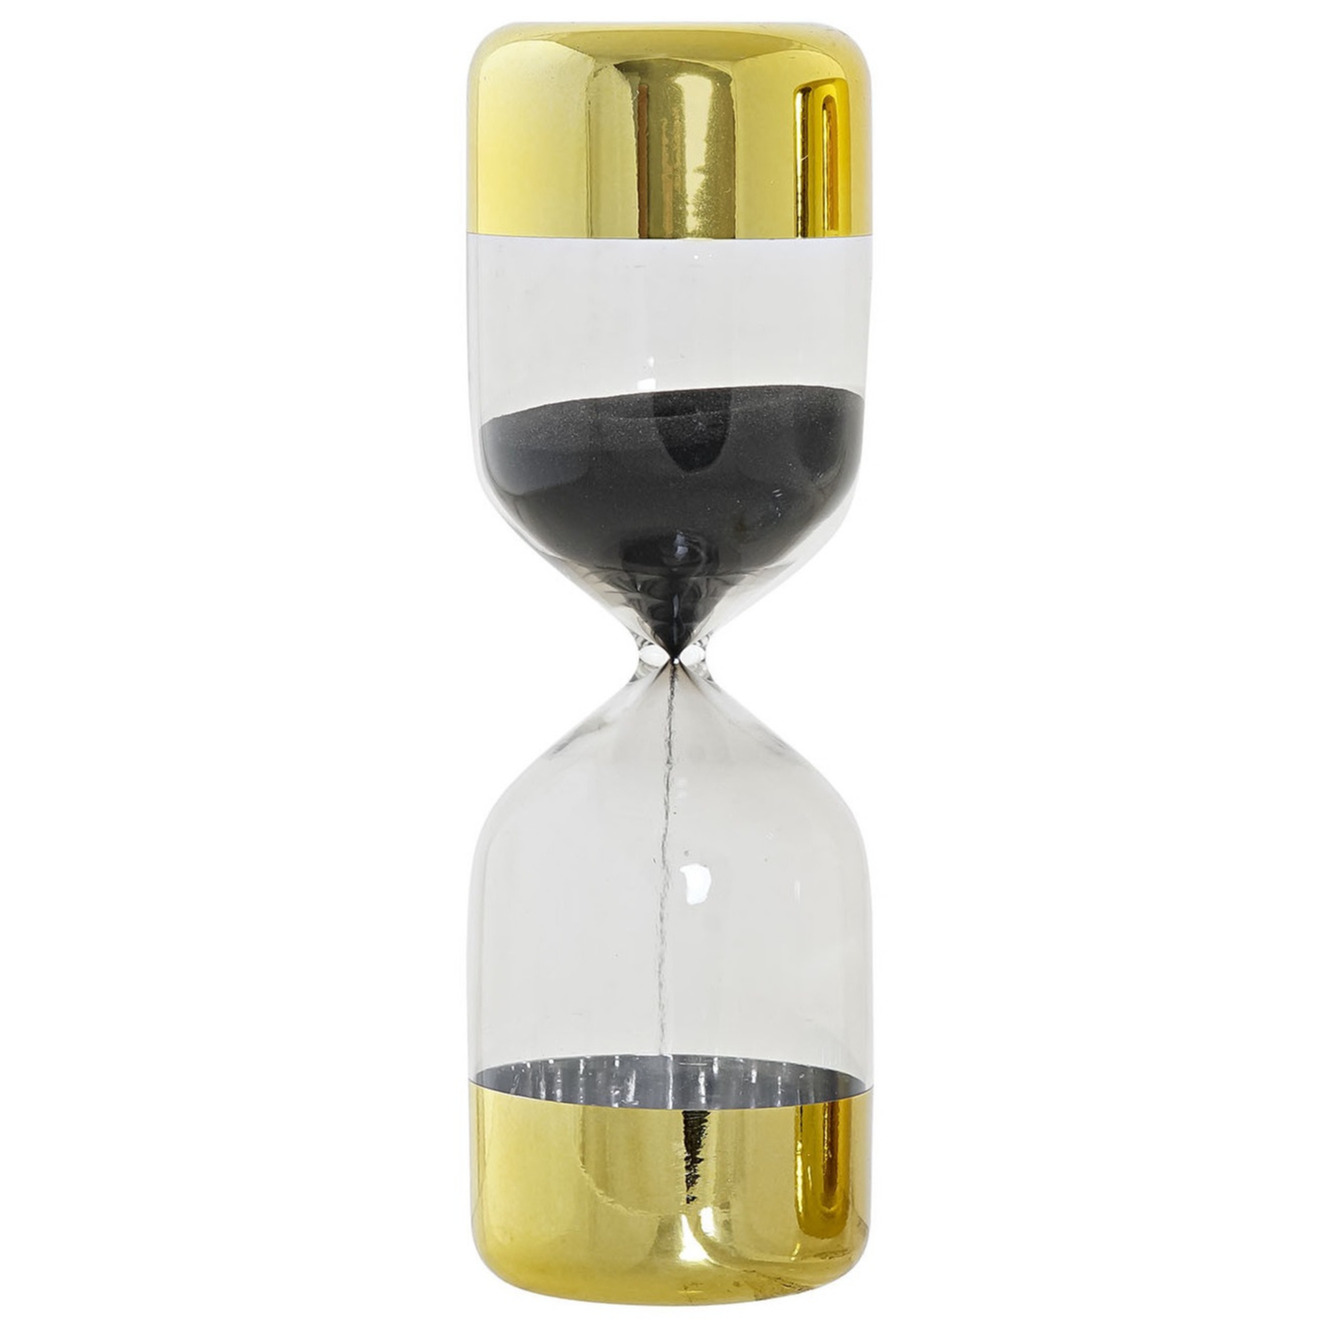 Merkloos Zandloper cilinder - decoratie of tijdsmeting - 15 minuten - zwart zand - D6,5 x H20,5 cm - glas -